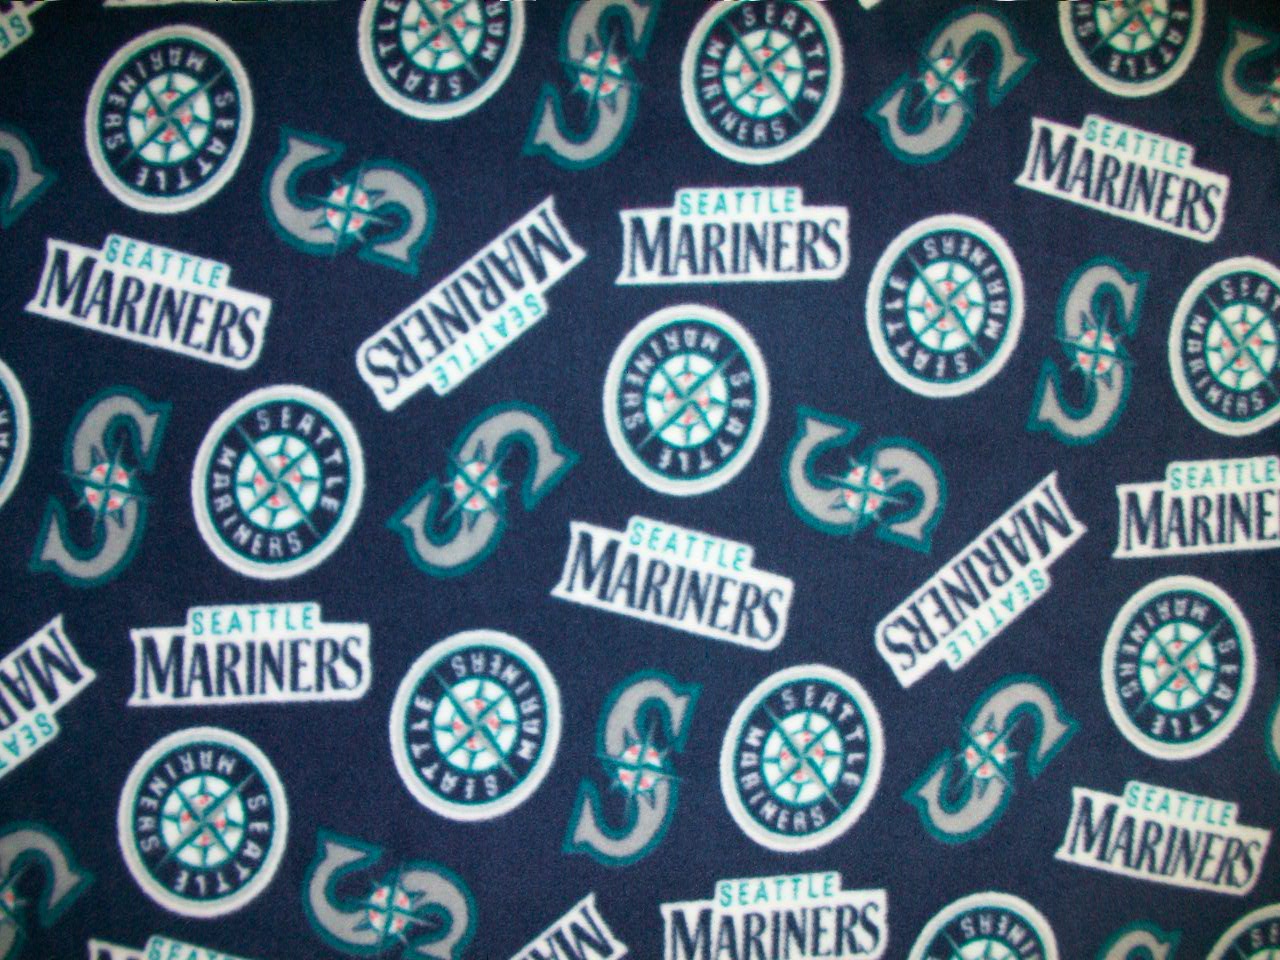 Collectible Seattle Mariners Baseball Memorabilia HD Wallpaper